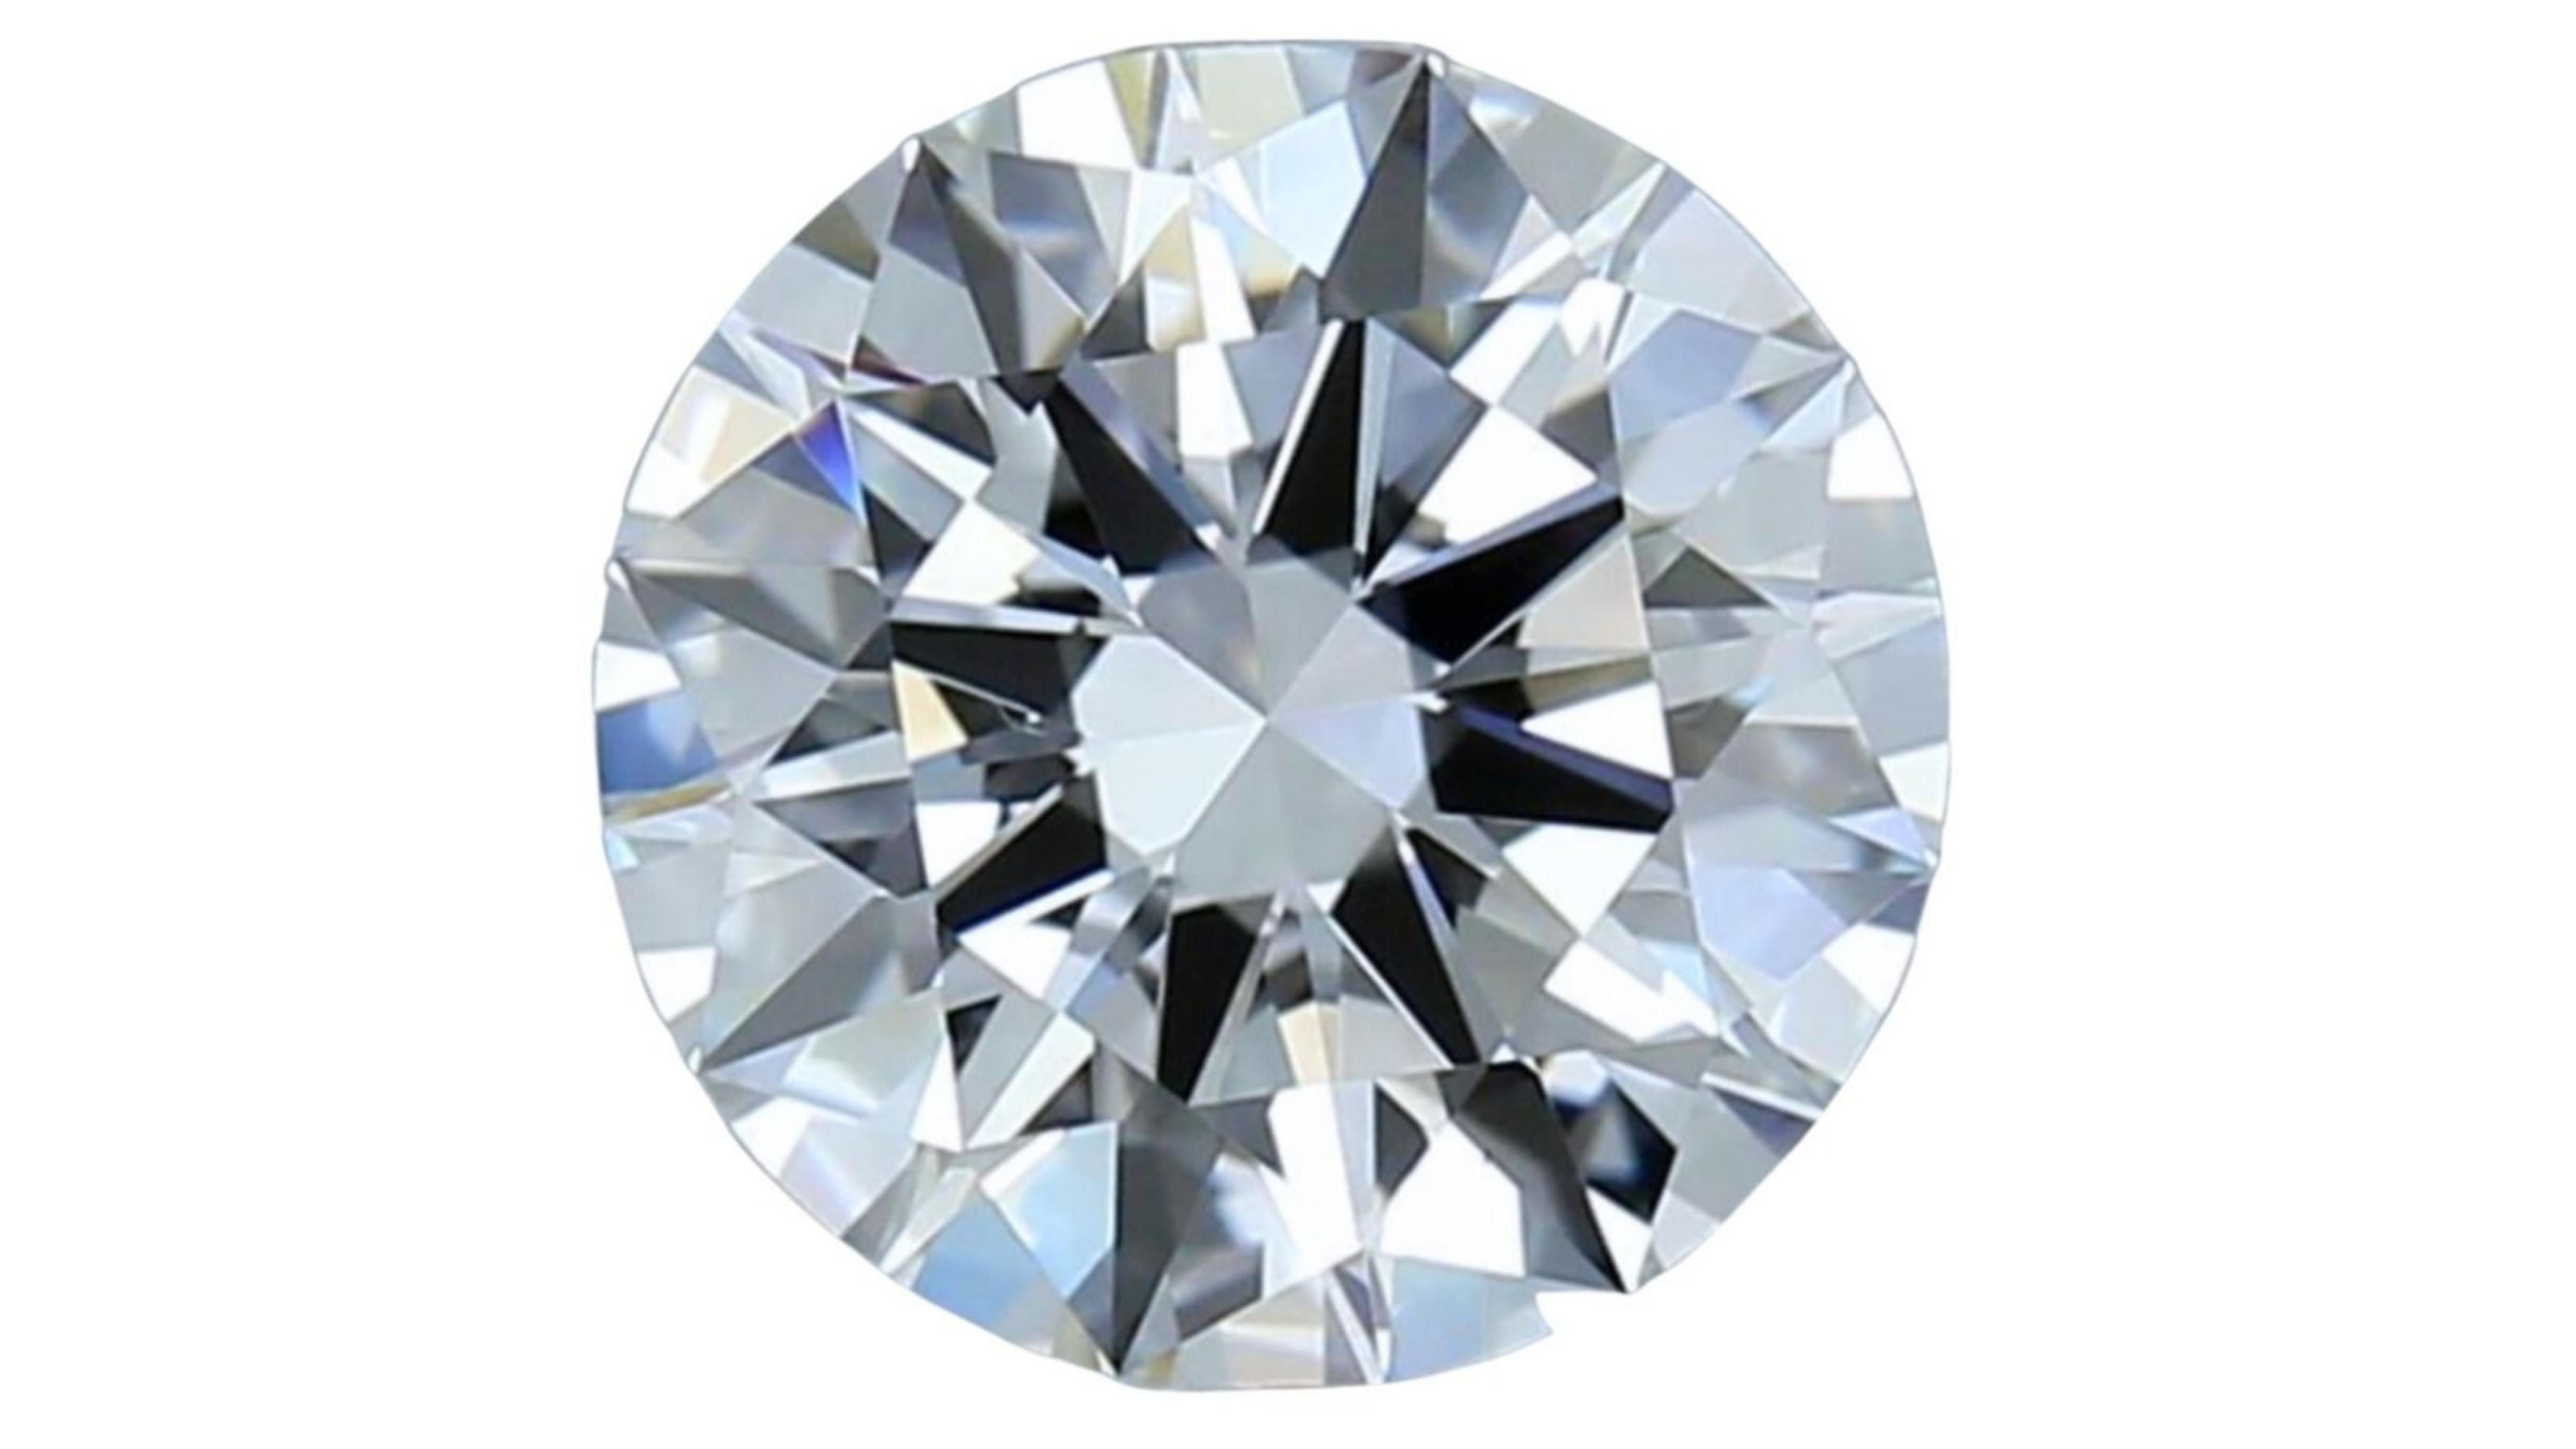 Taille ronde 1pc. Brilliante 2,07 carats diamant naturel rond et brillant en vente